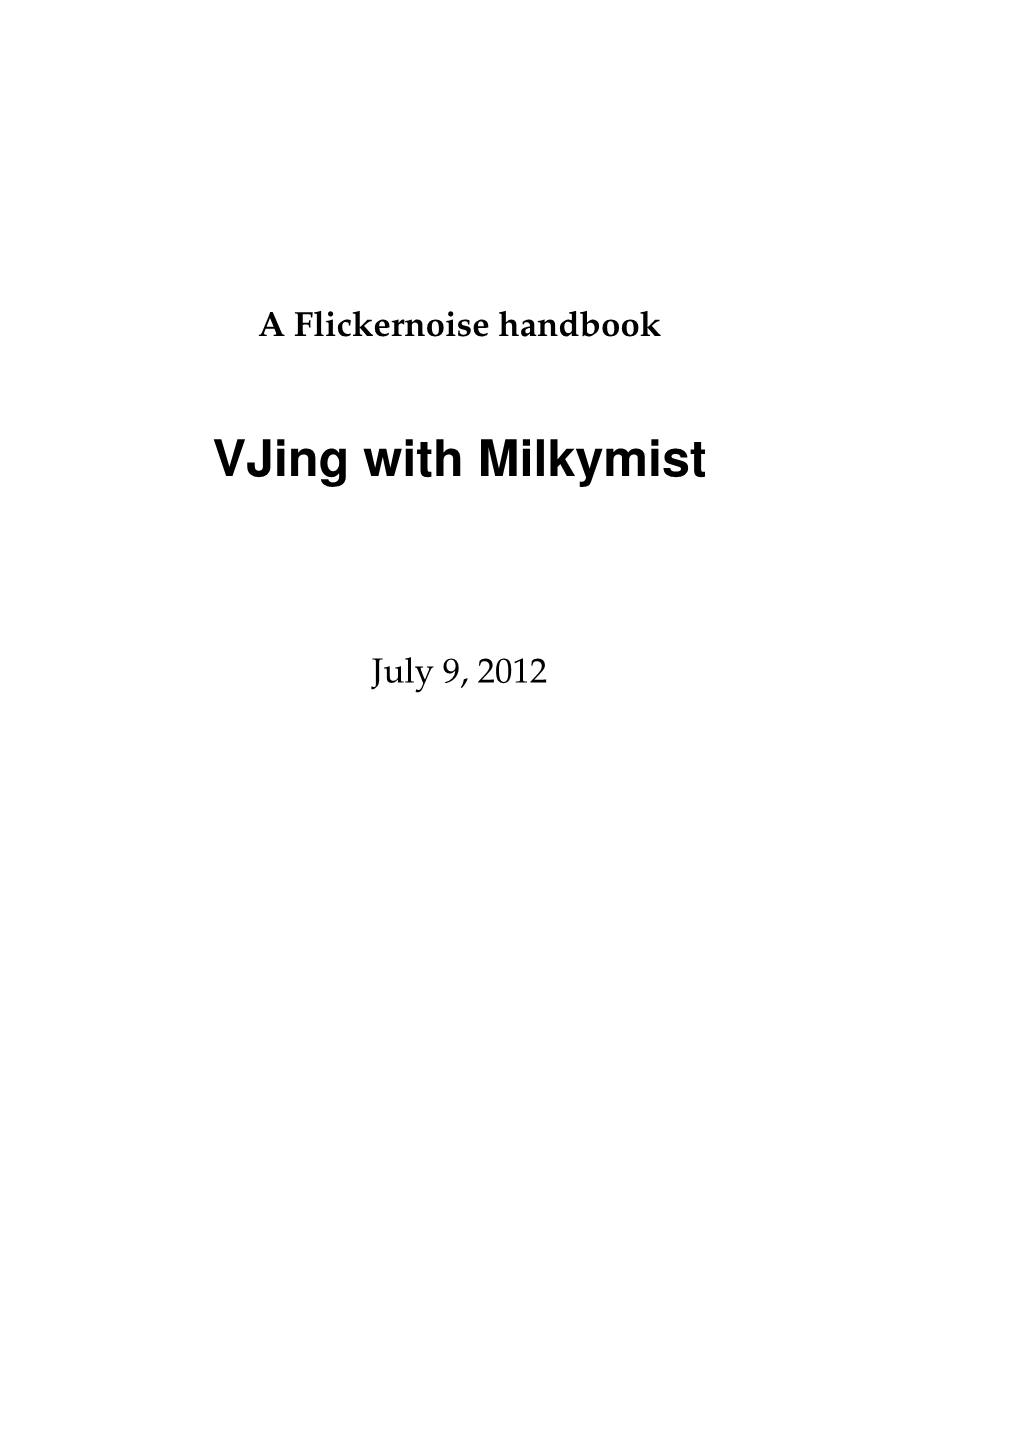 Vjing with Milkymist